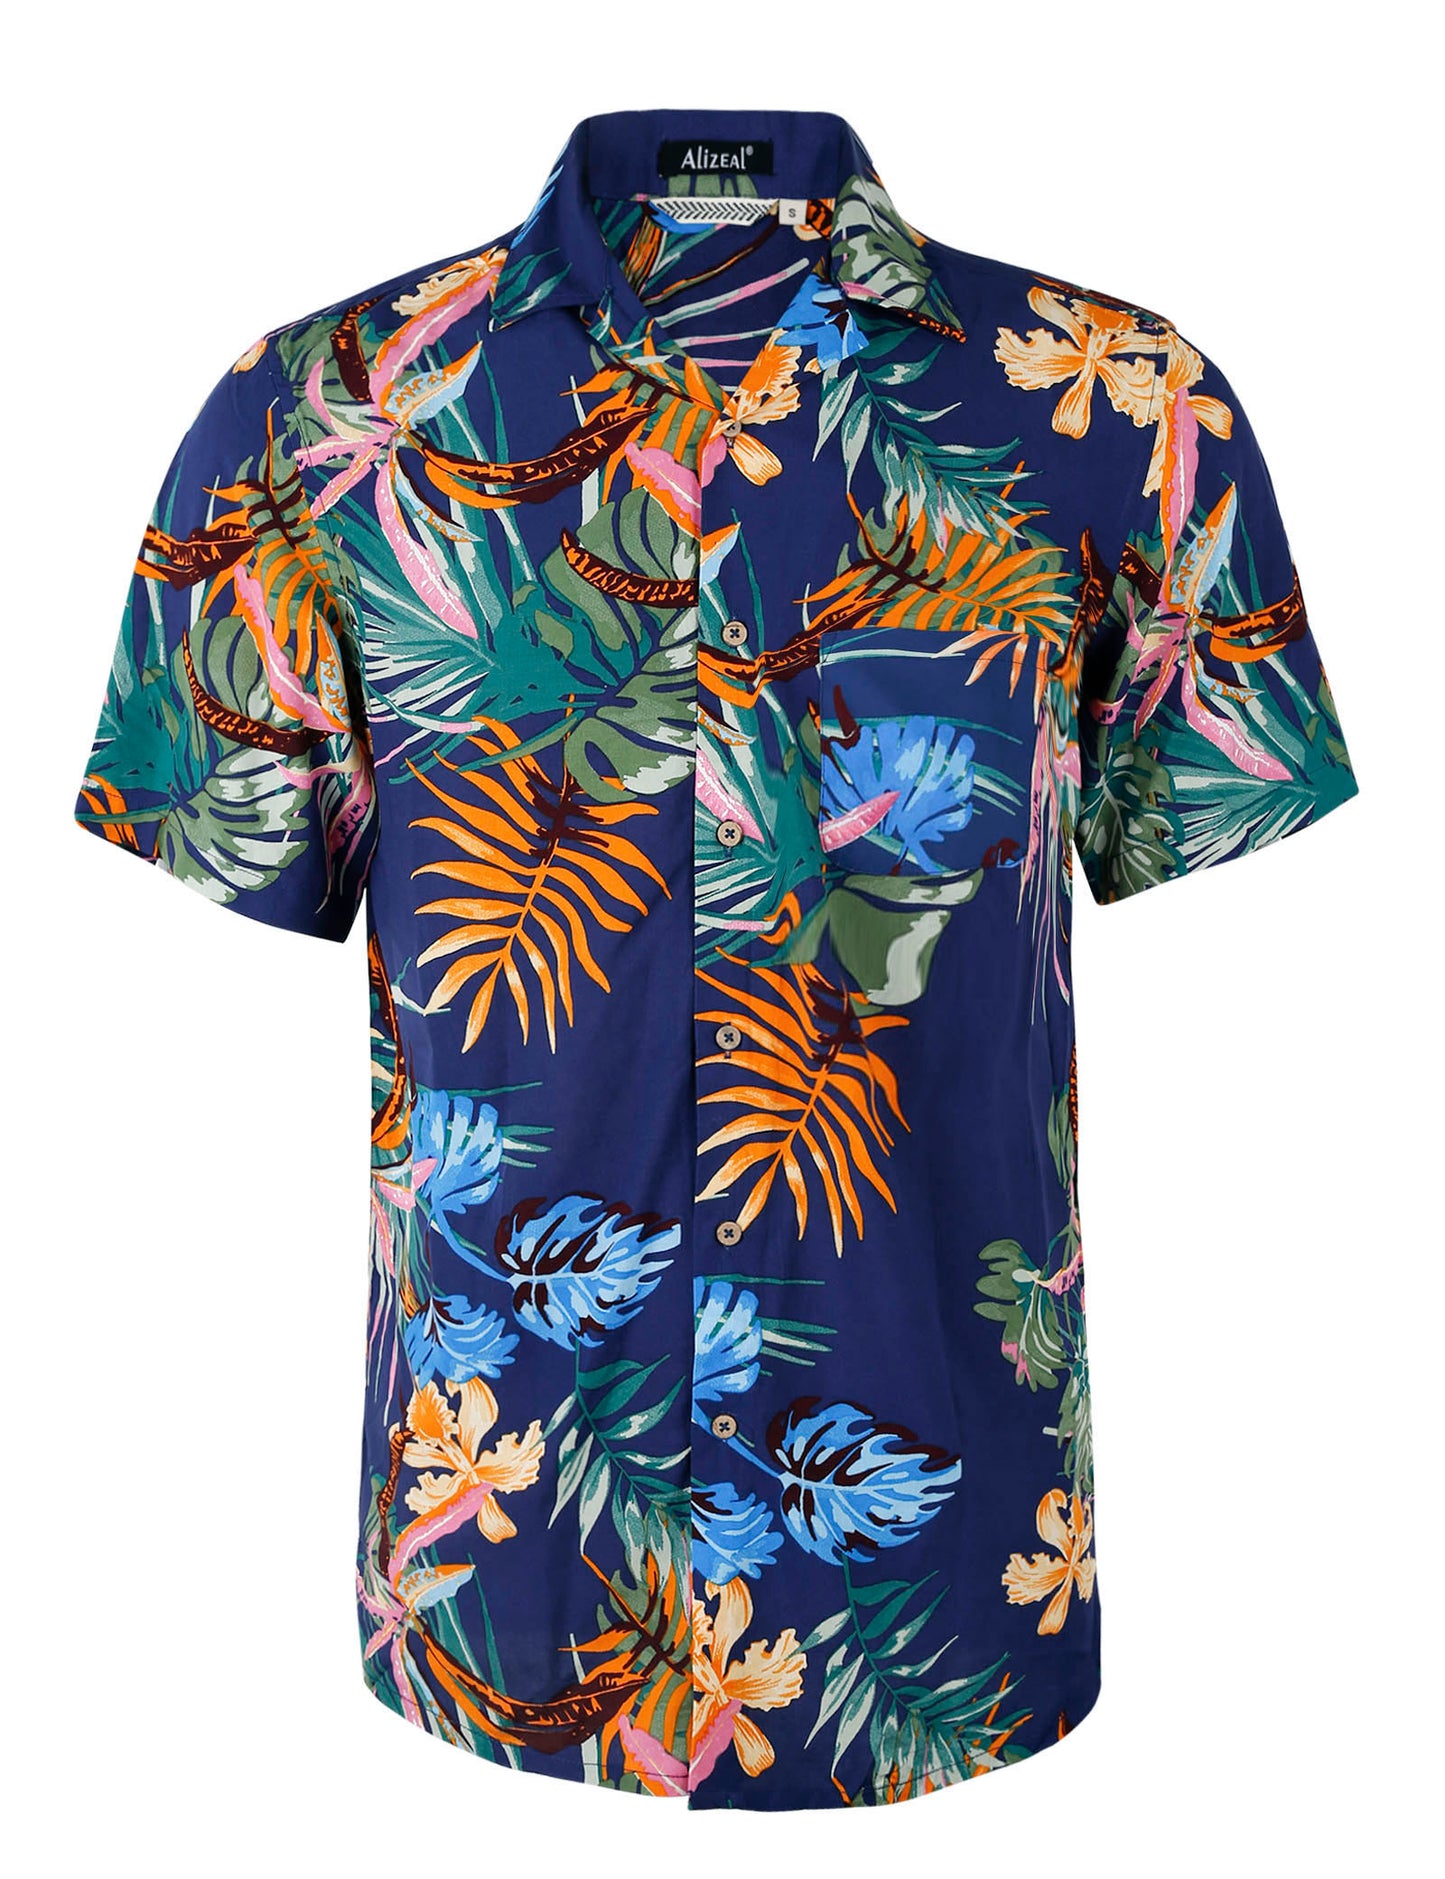 Alizeal Mens Hawaiian Short Sleeve Shirts Floral Casual Button Down Summer Aloha Beach Shirts, Navy (Leaf)